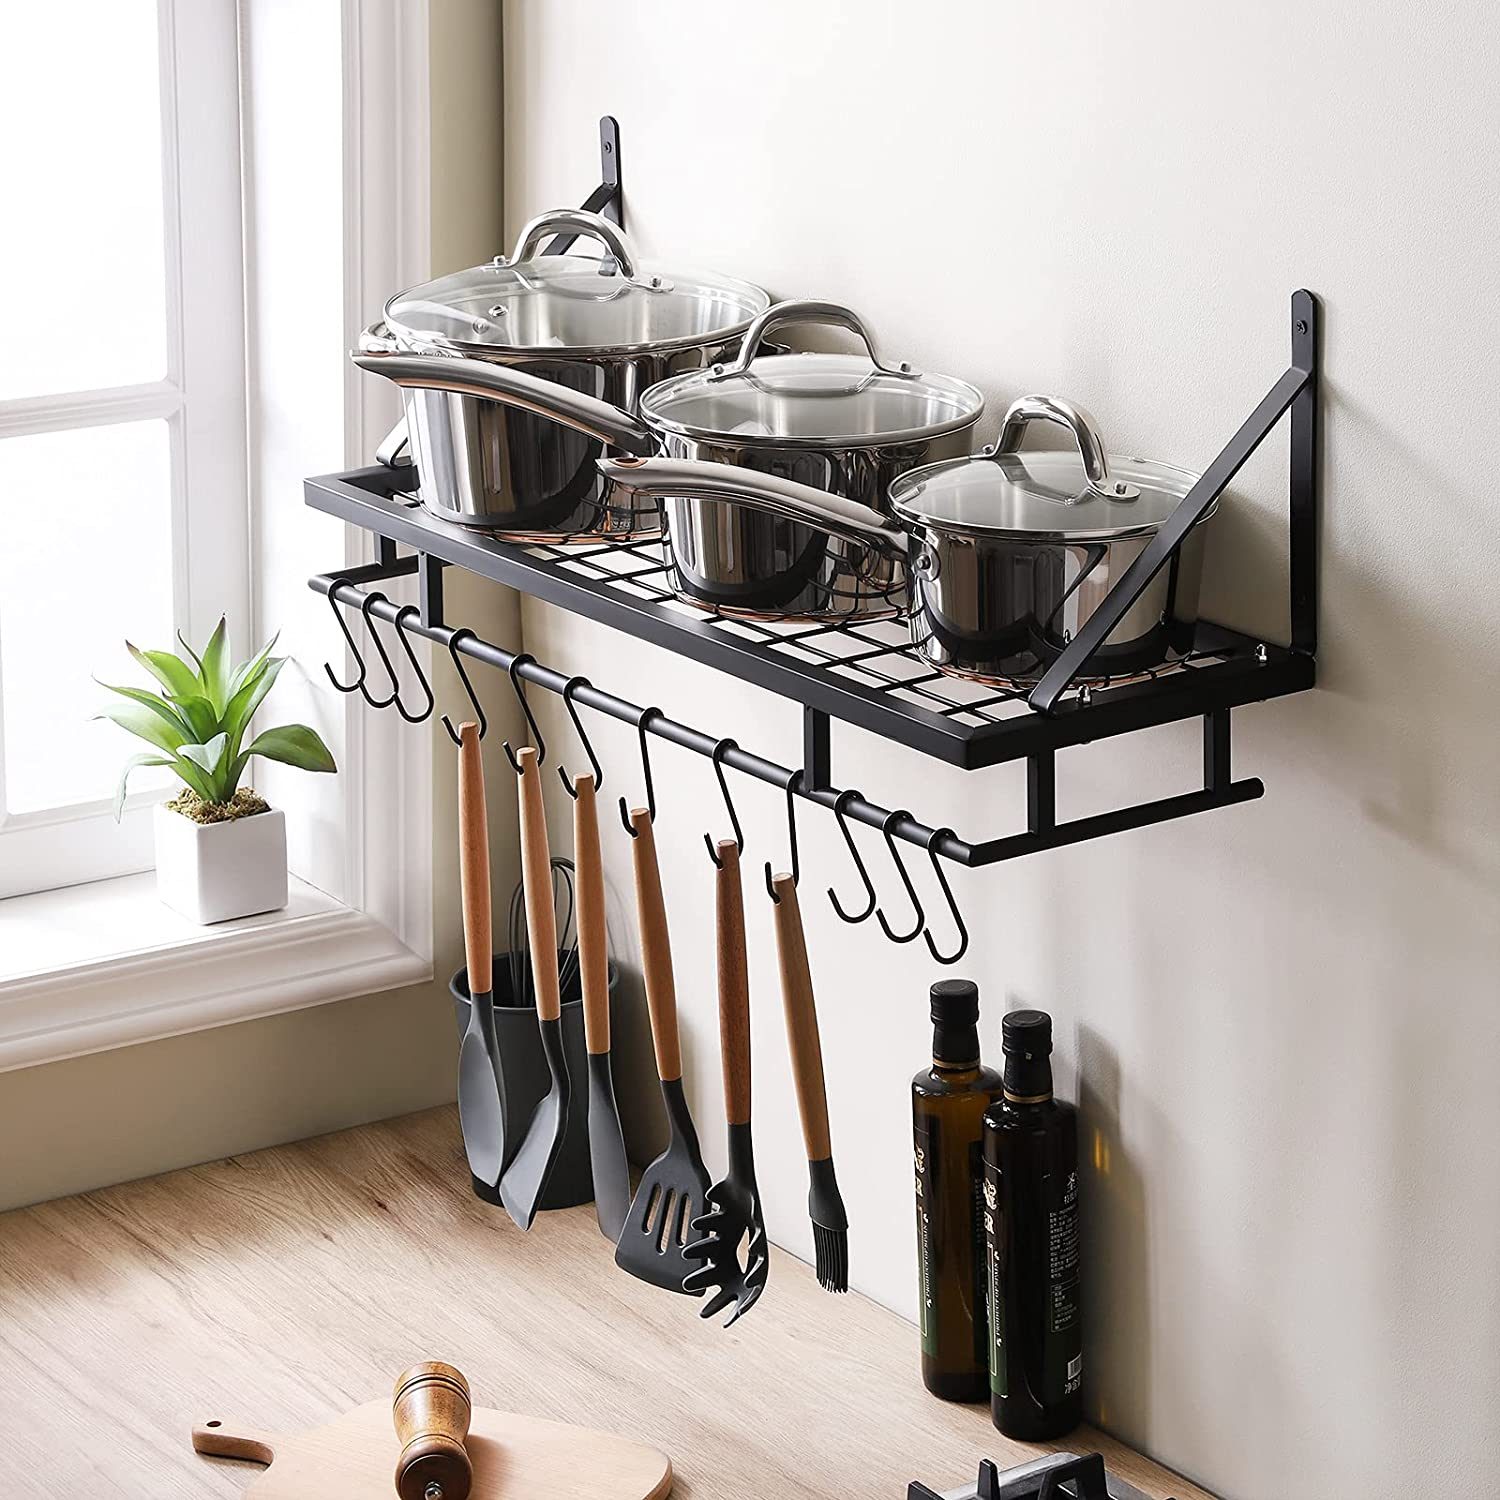 https://www.tasteofhome.com/wp-content/uploads/2022/03/kes-30-inch-kitchen-pan-pot-rack-wall-ecomm-via-amazon.com_.jpg